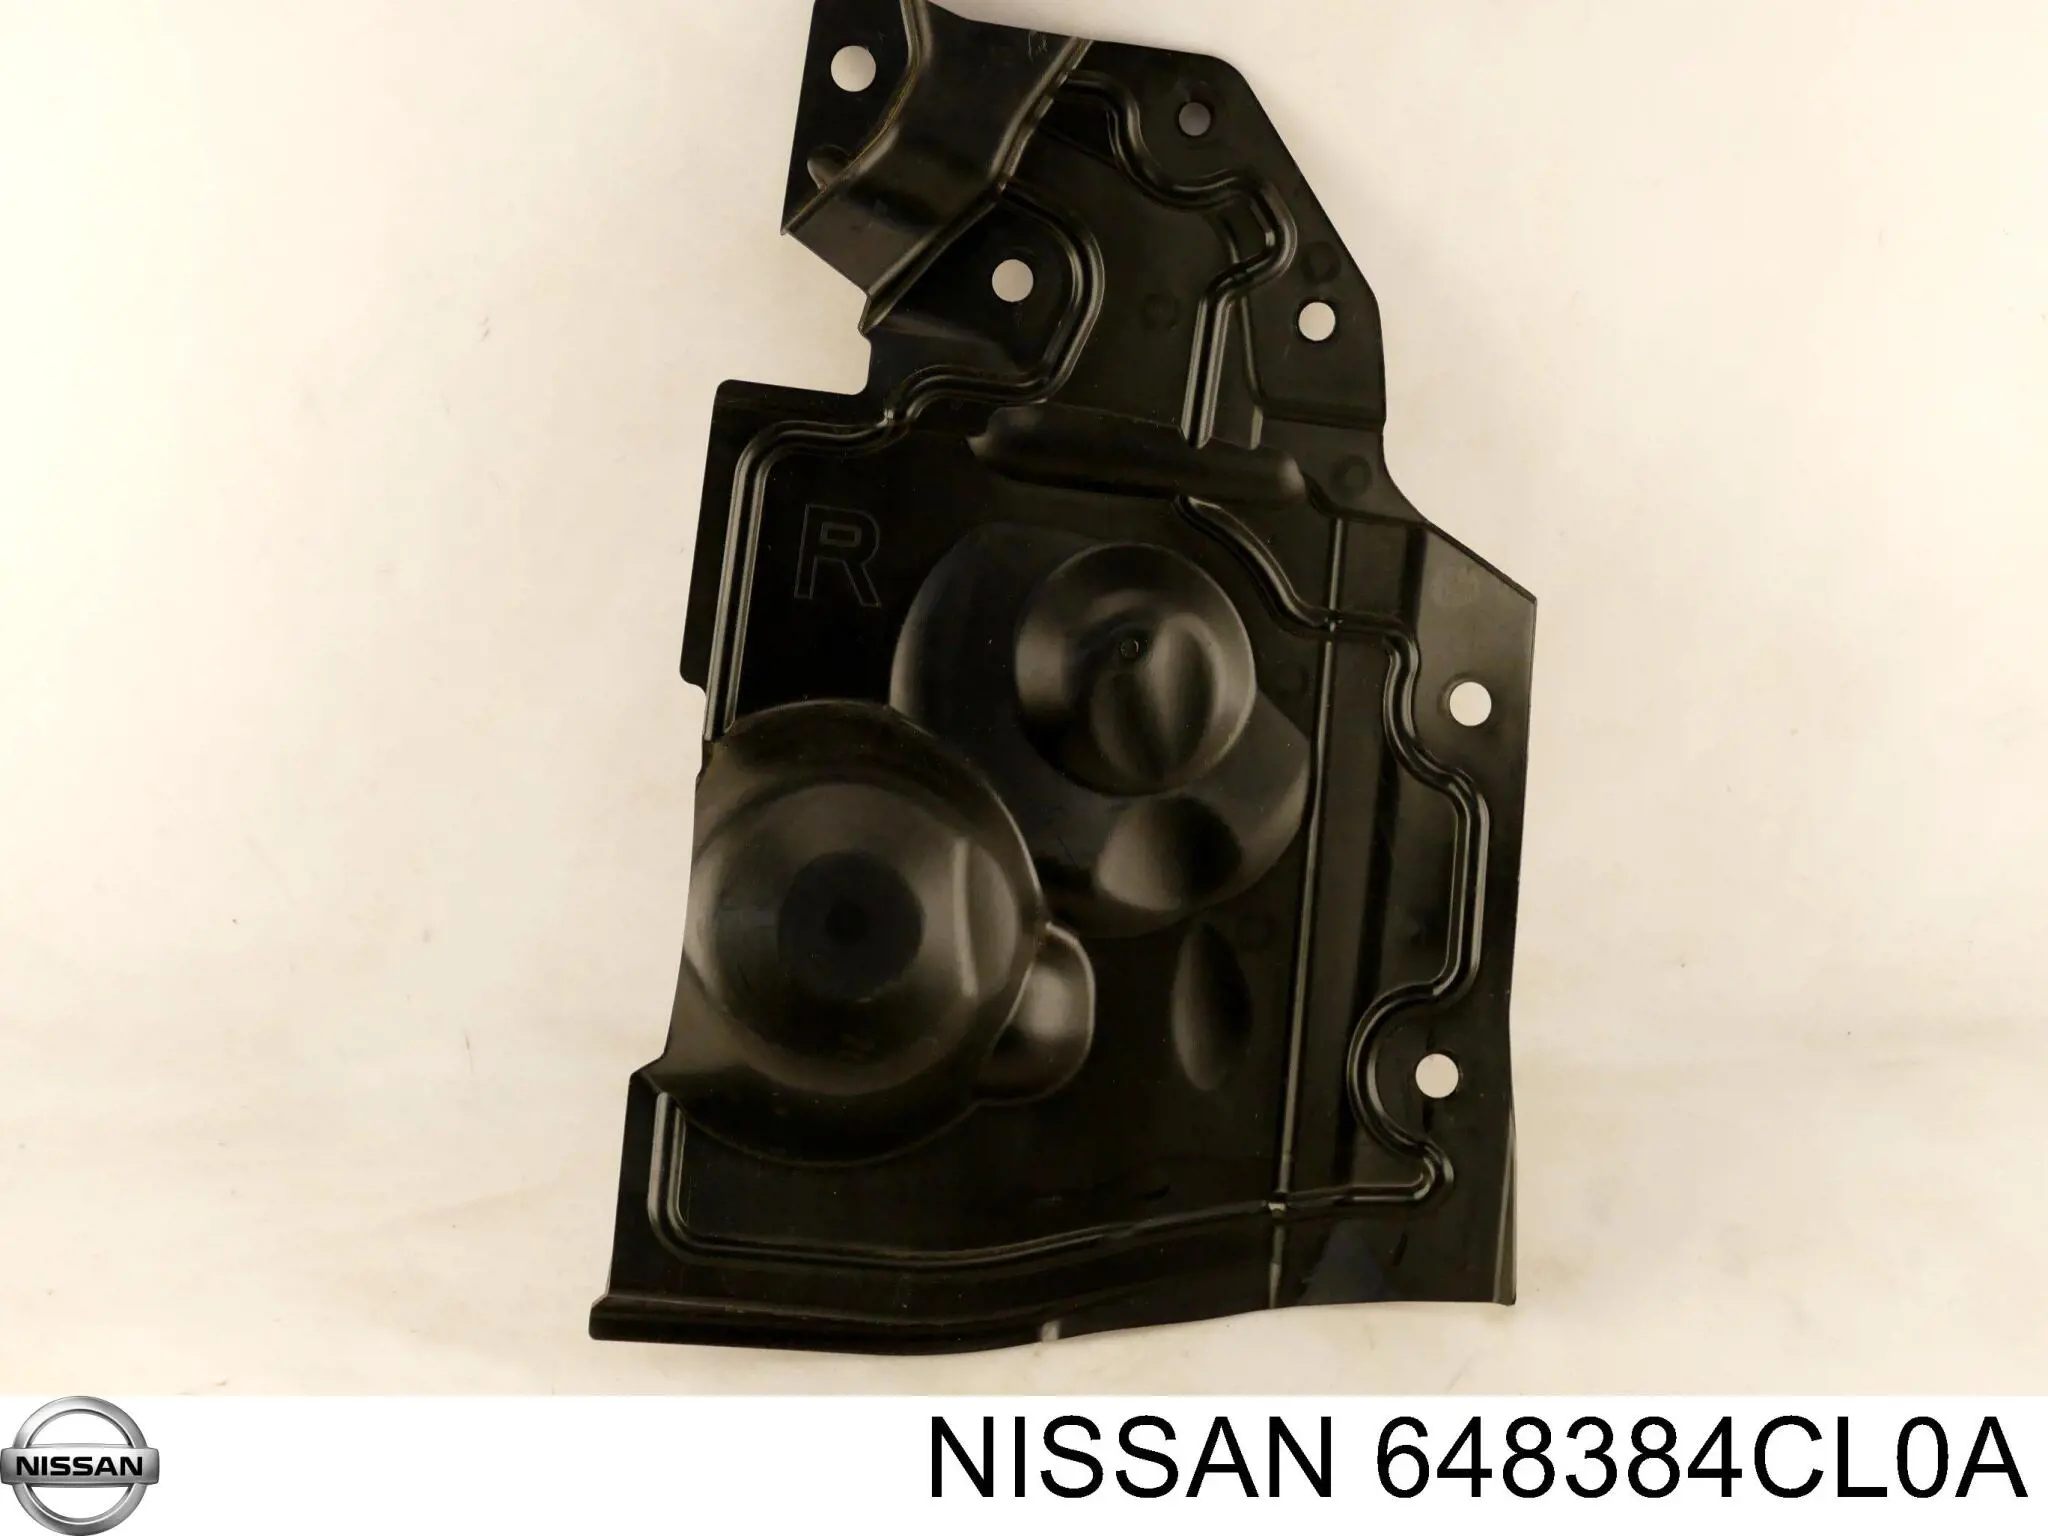 648384CL0A Nissan protección motor derecha